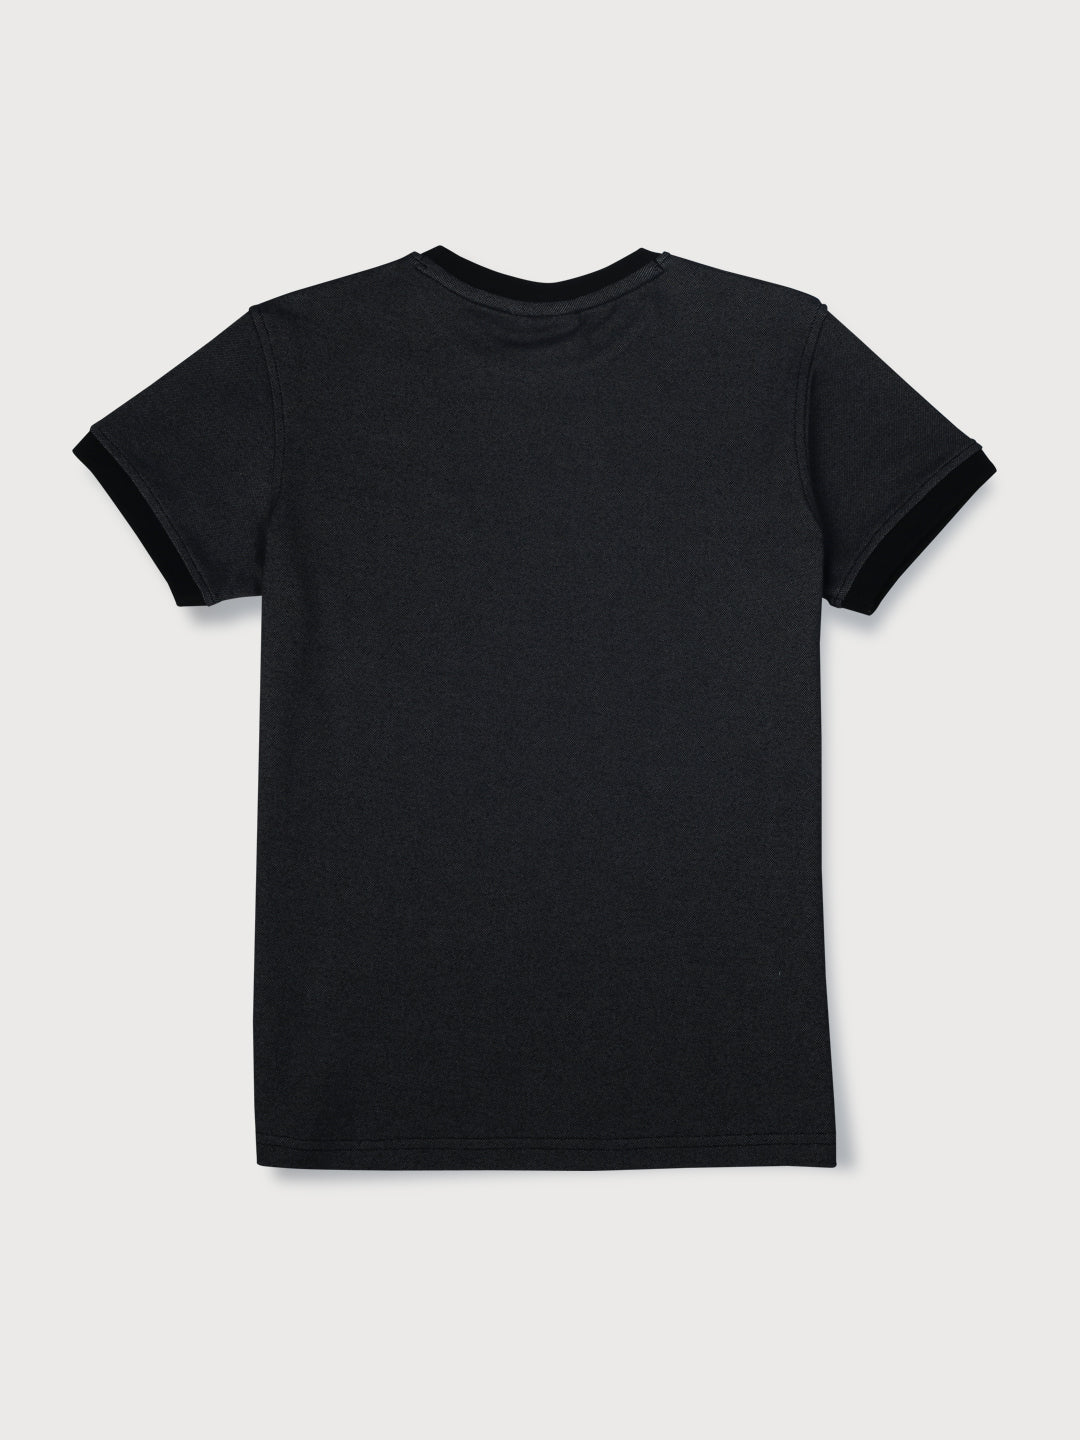 Boys Black Solid Knits T-Shirt